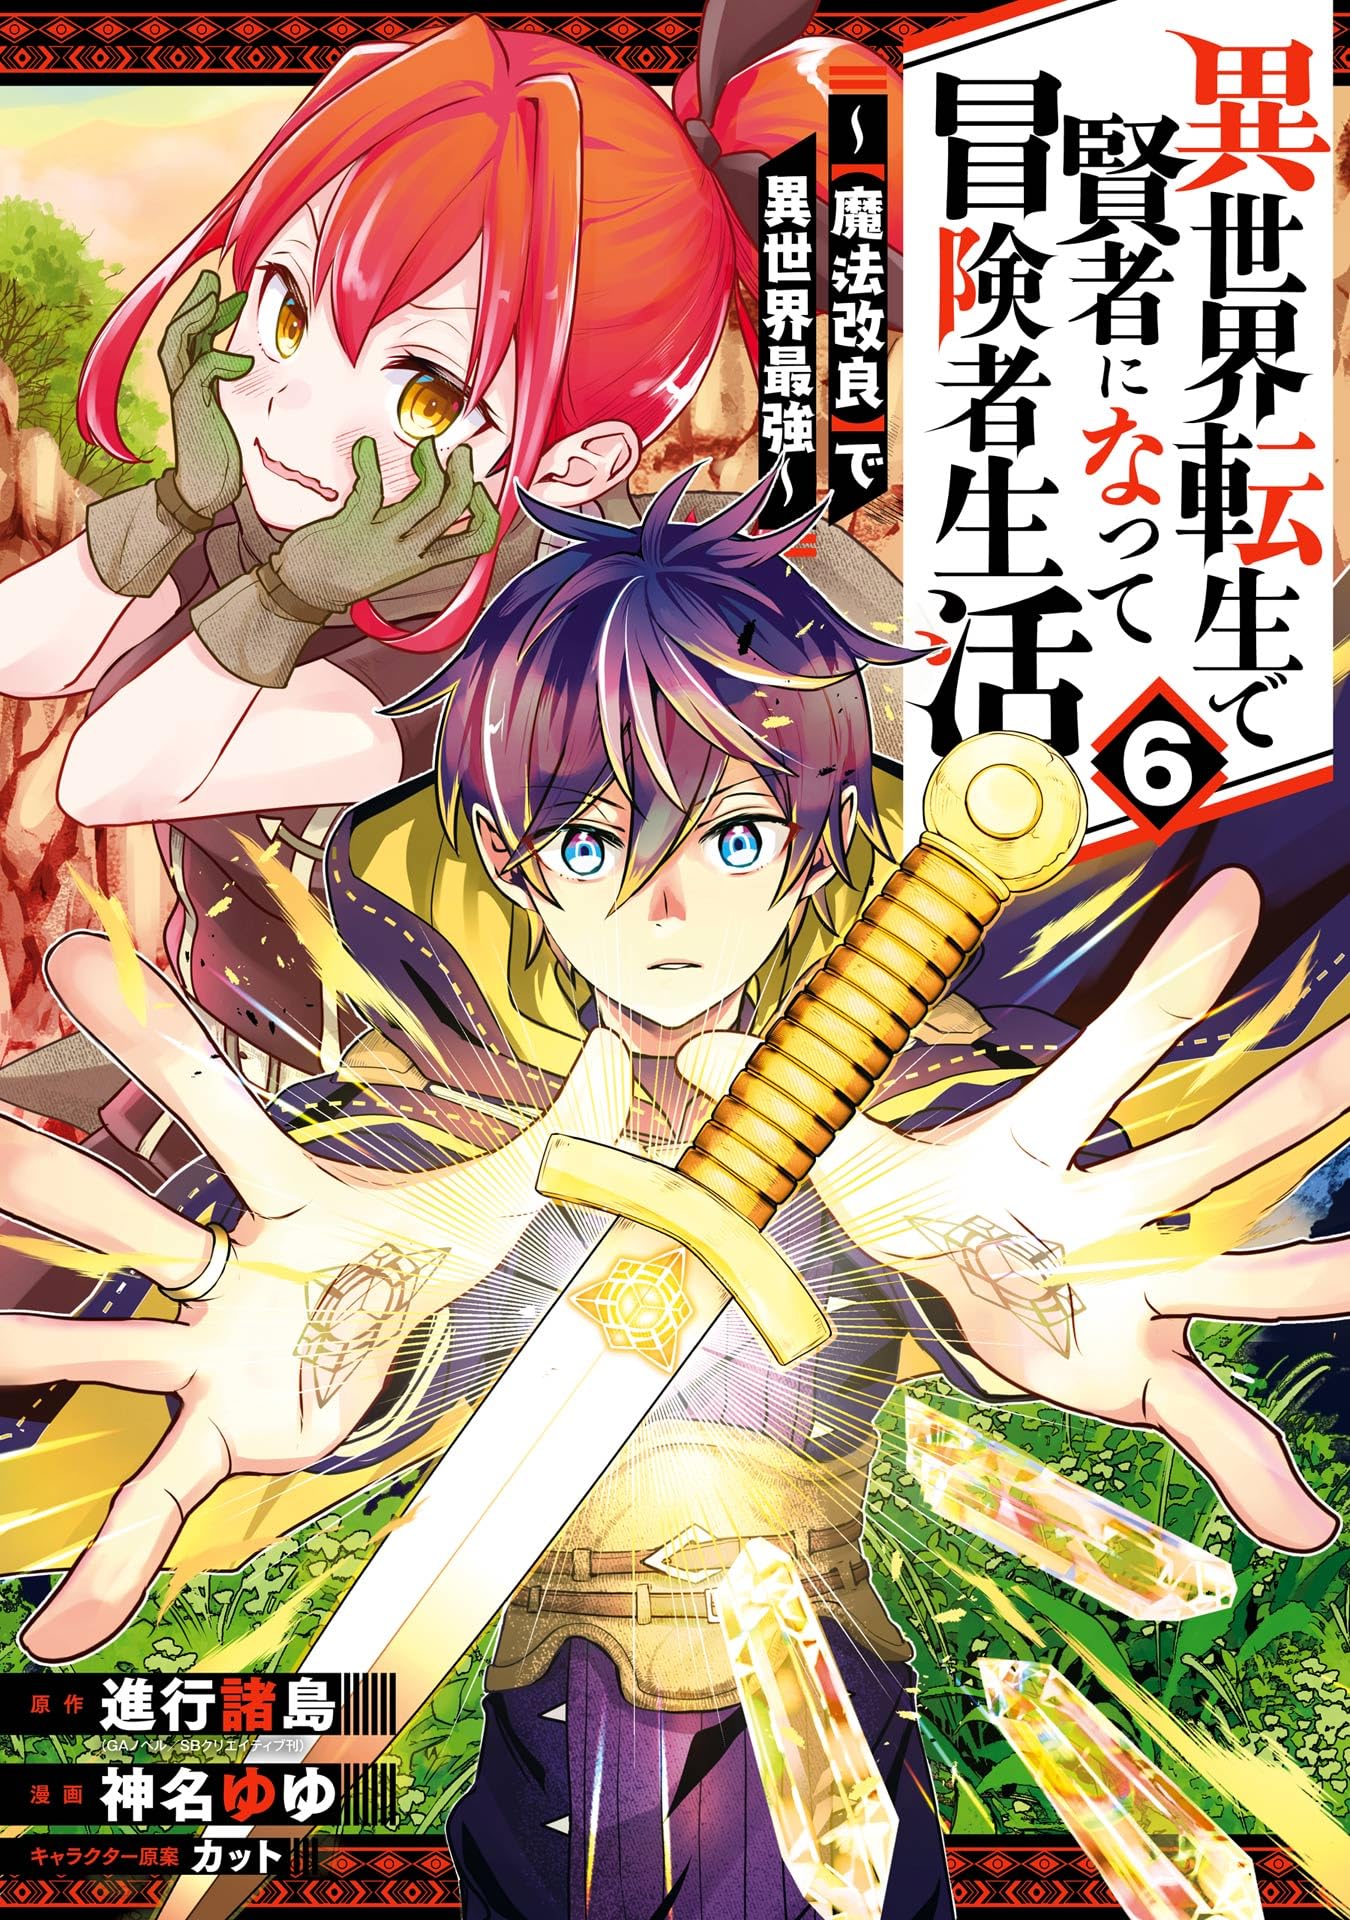 Isekai Tensei: Recruited to Another World Manga